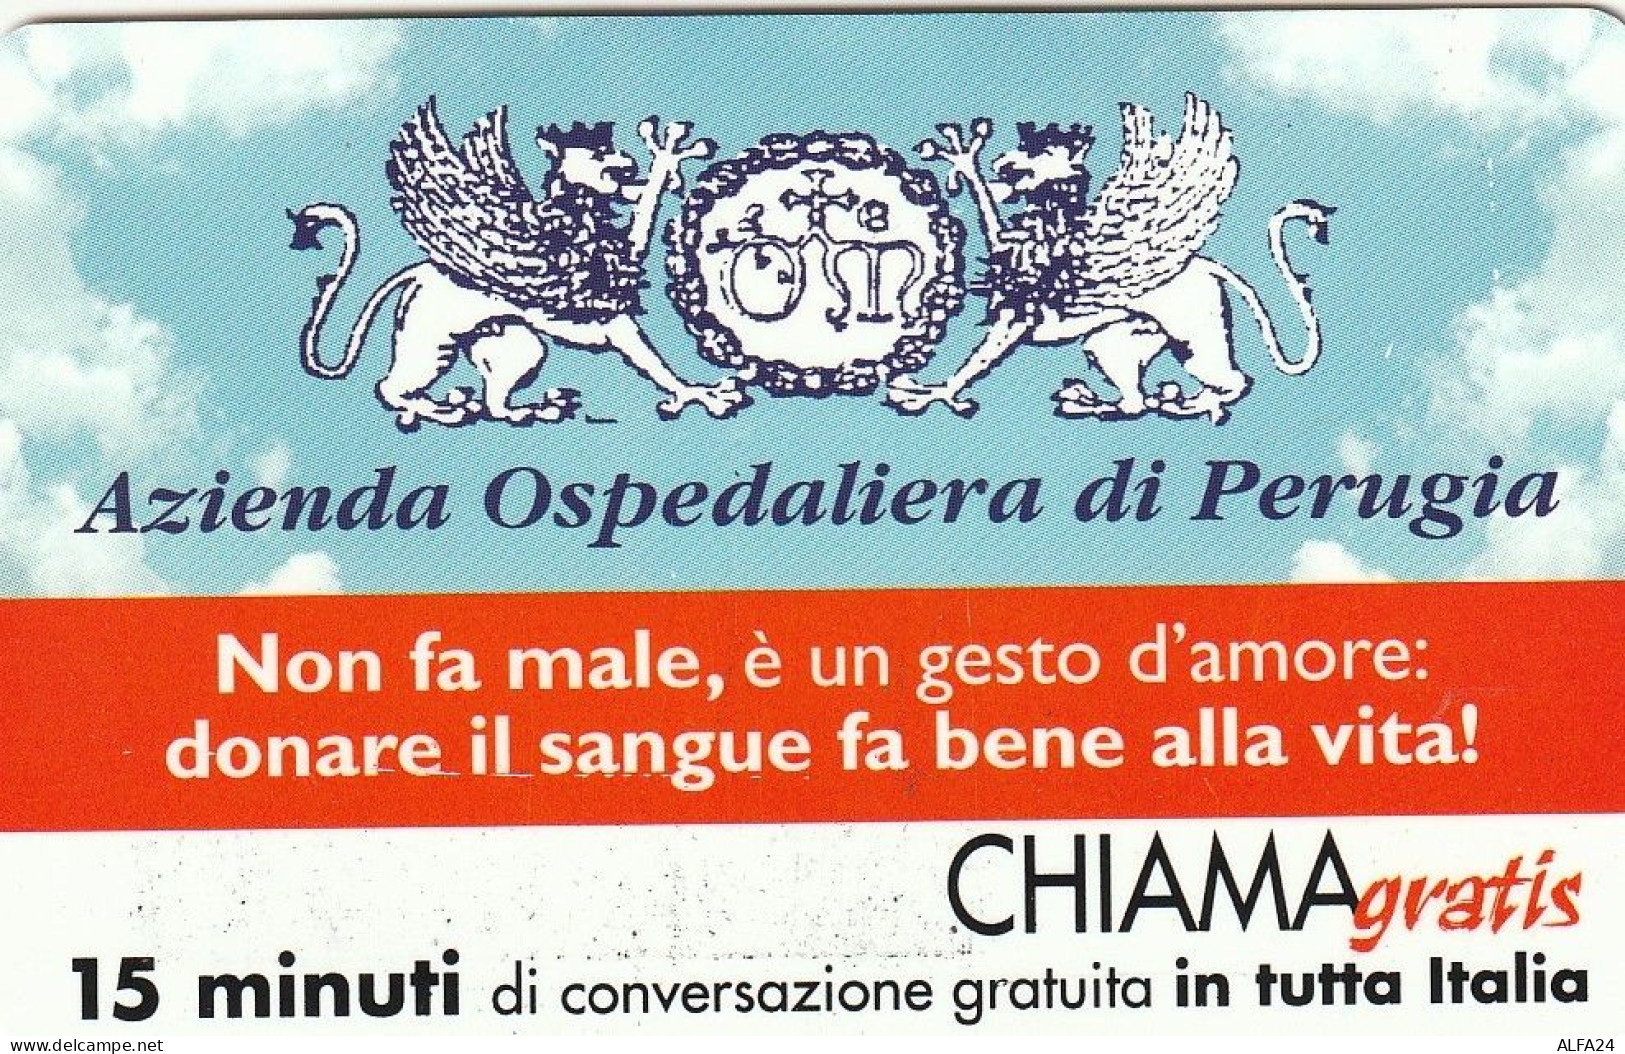 CHIAMAGRATIS MASTER/PROTOTIPO 243 AZ OSPED PERUGIA  (CV1730 - Private-Omaggi